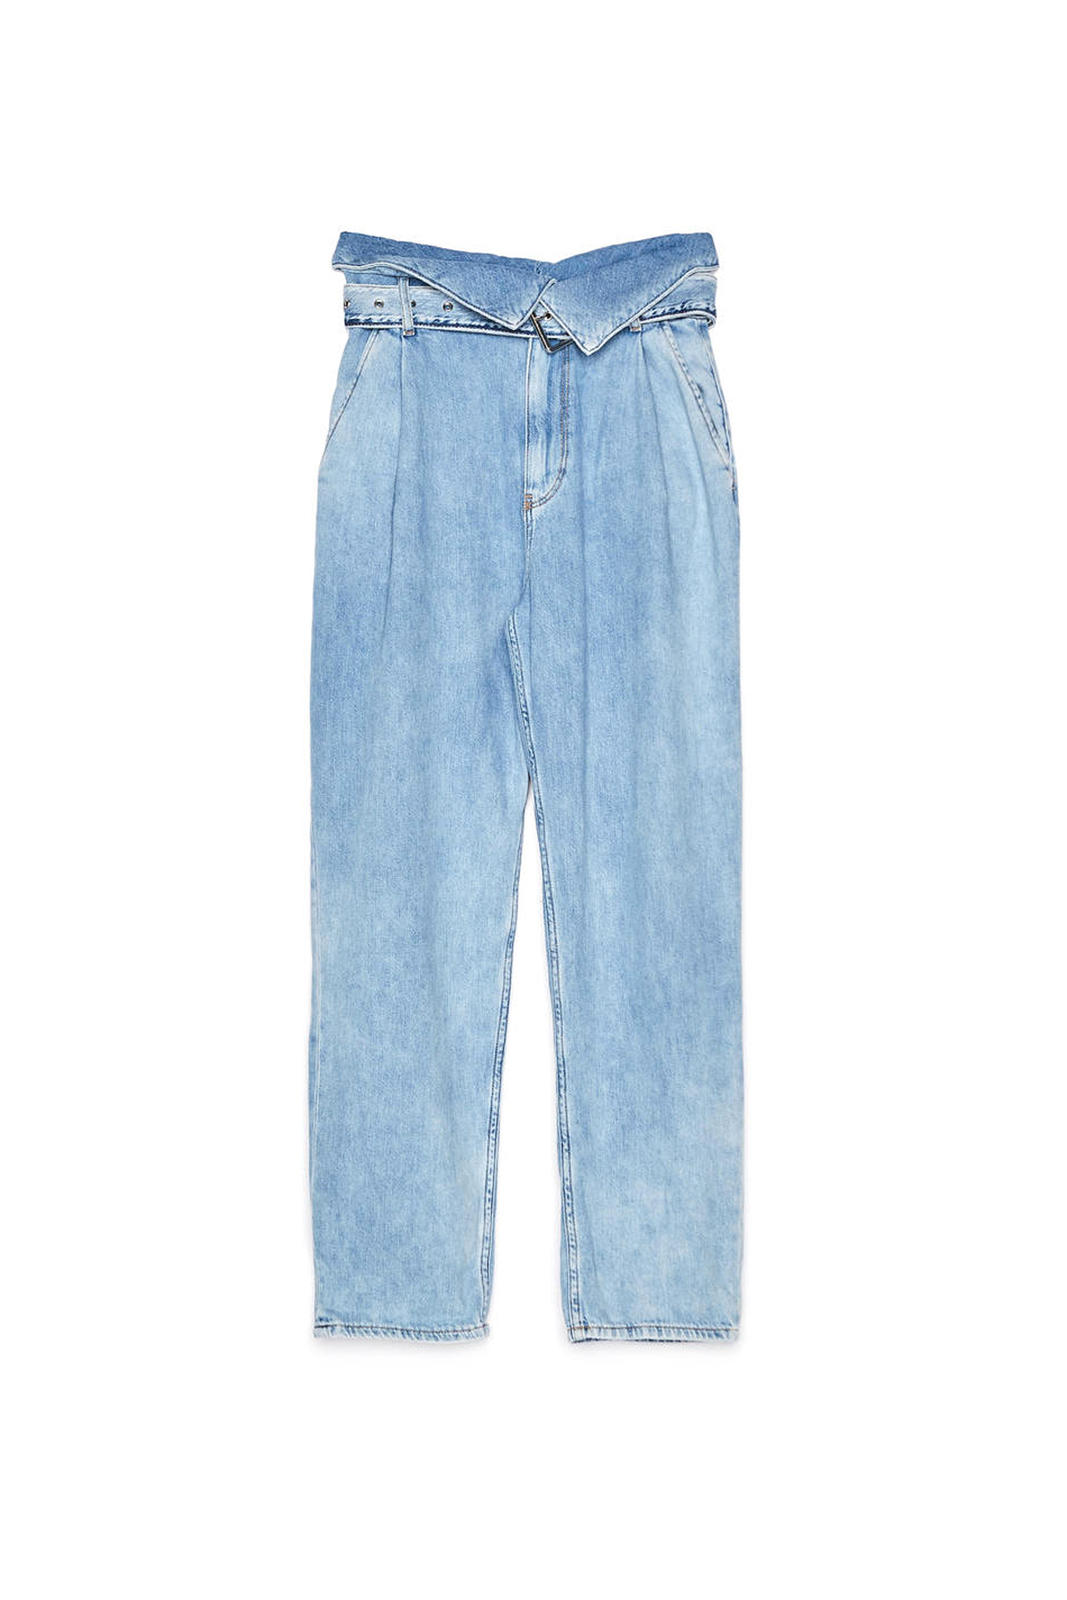 Jeans-Mom-Fit-com-cinto,-Bershka,-€35.99